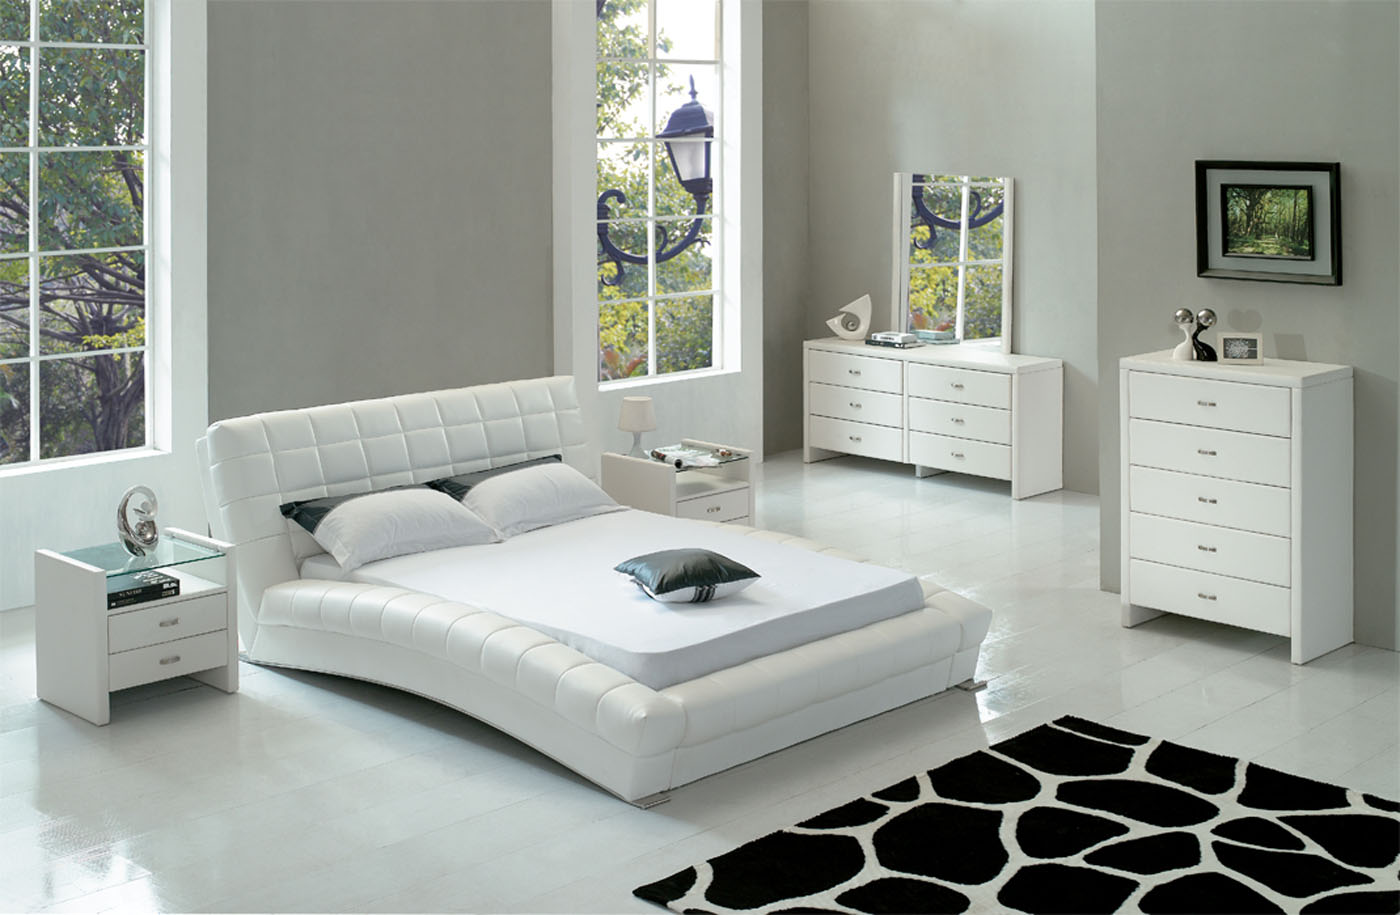 diy painting bedroom white furniture